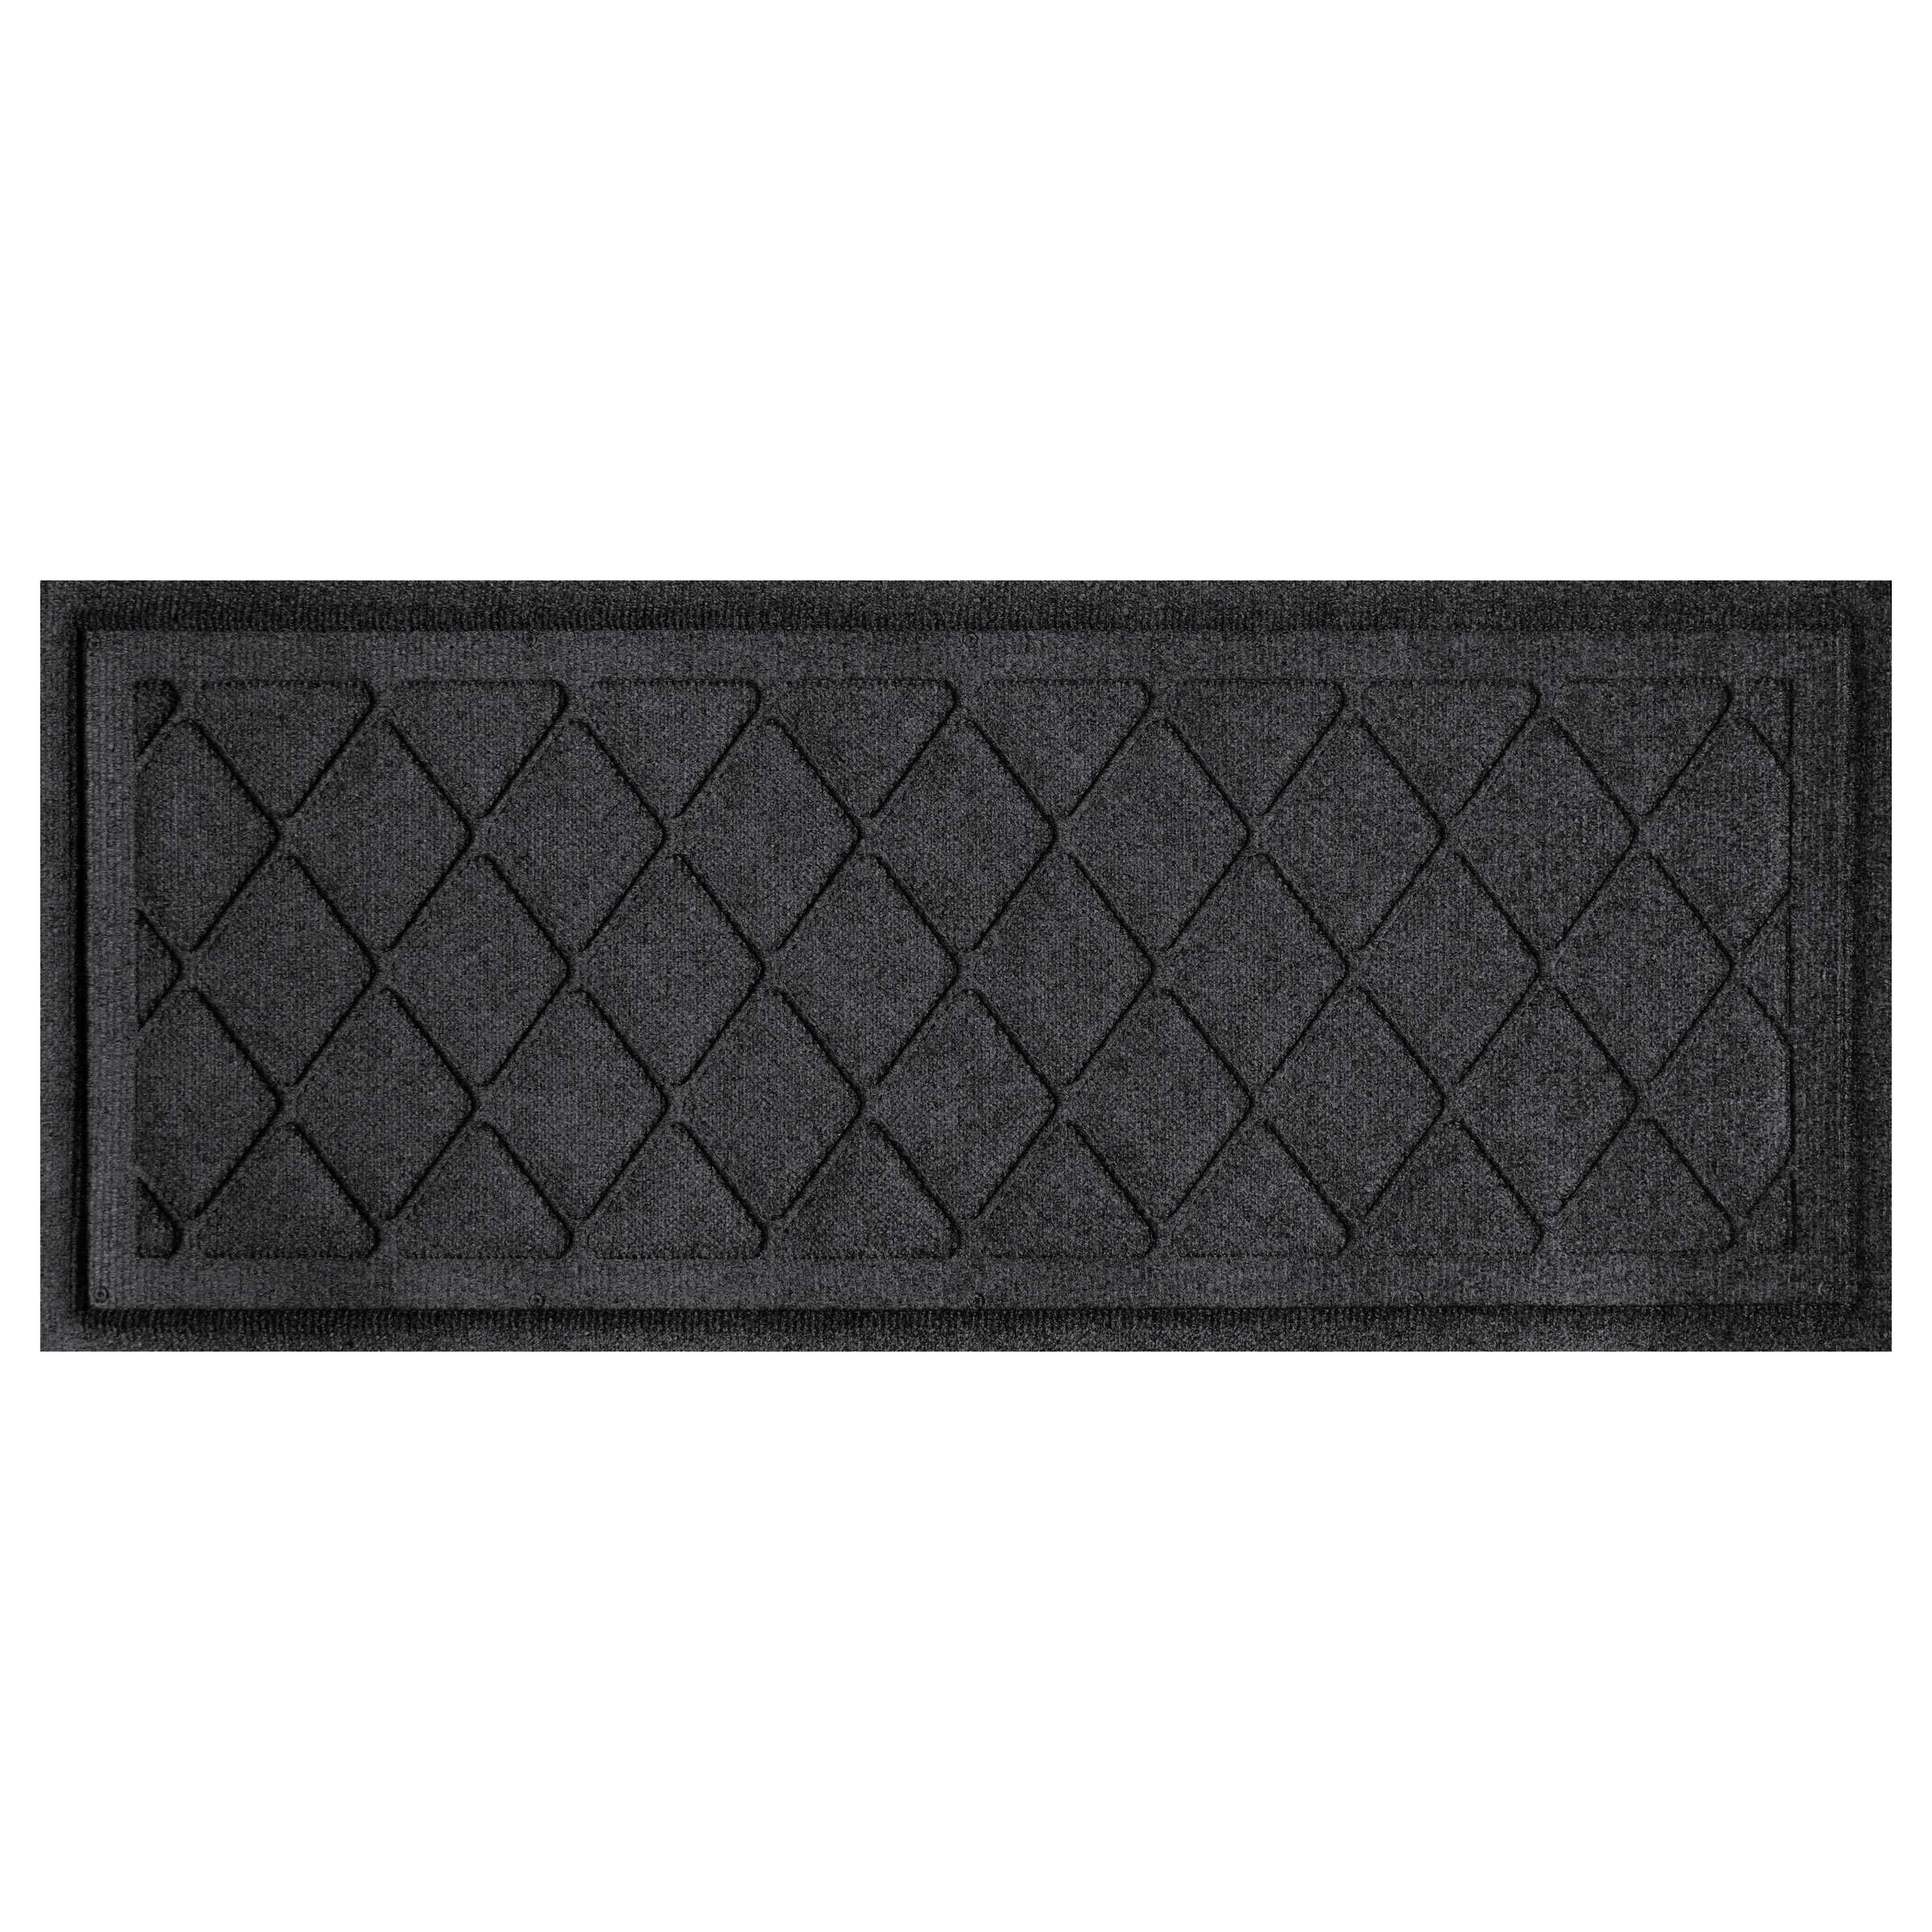 Waterhog Pineapple Doormat, 2' x 3' - Bluestone